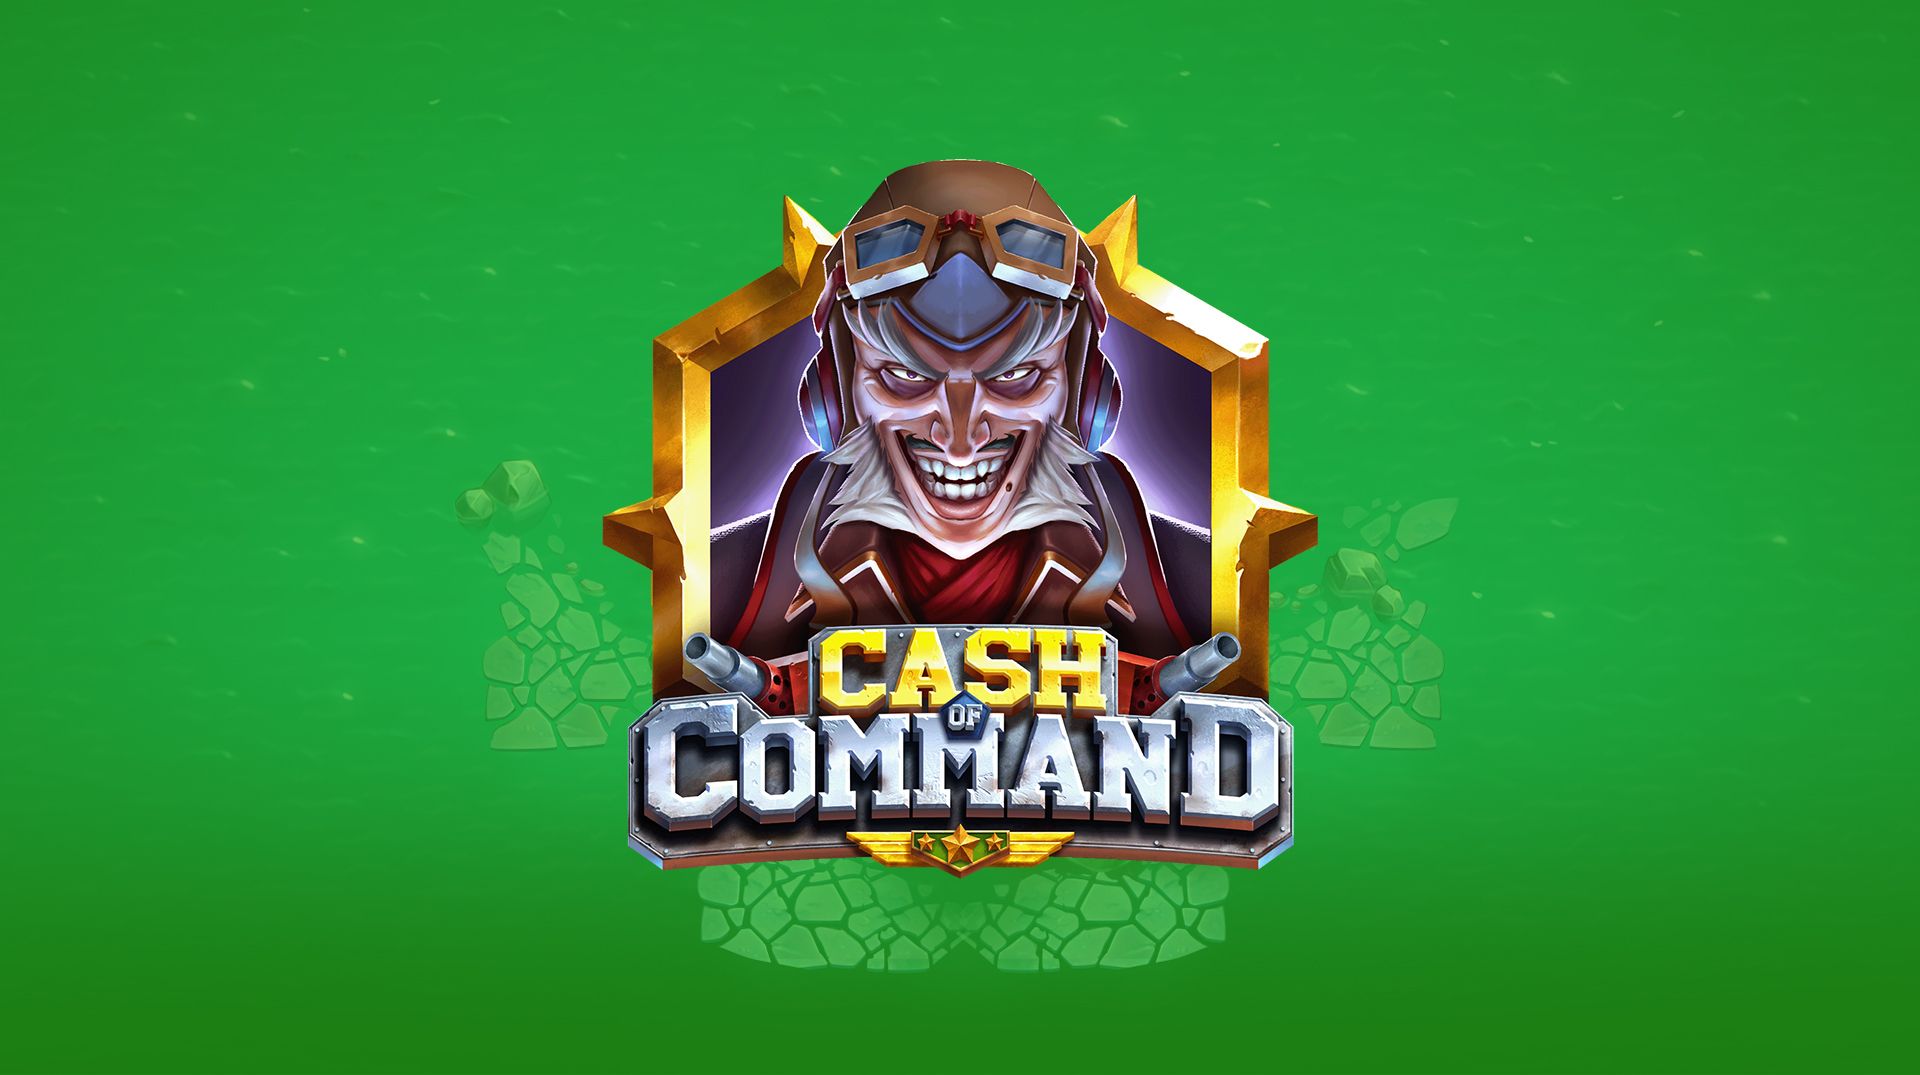 Cash Of Command slot machine